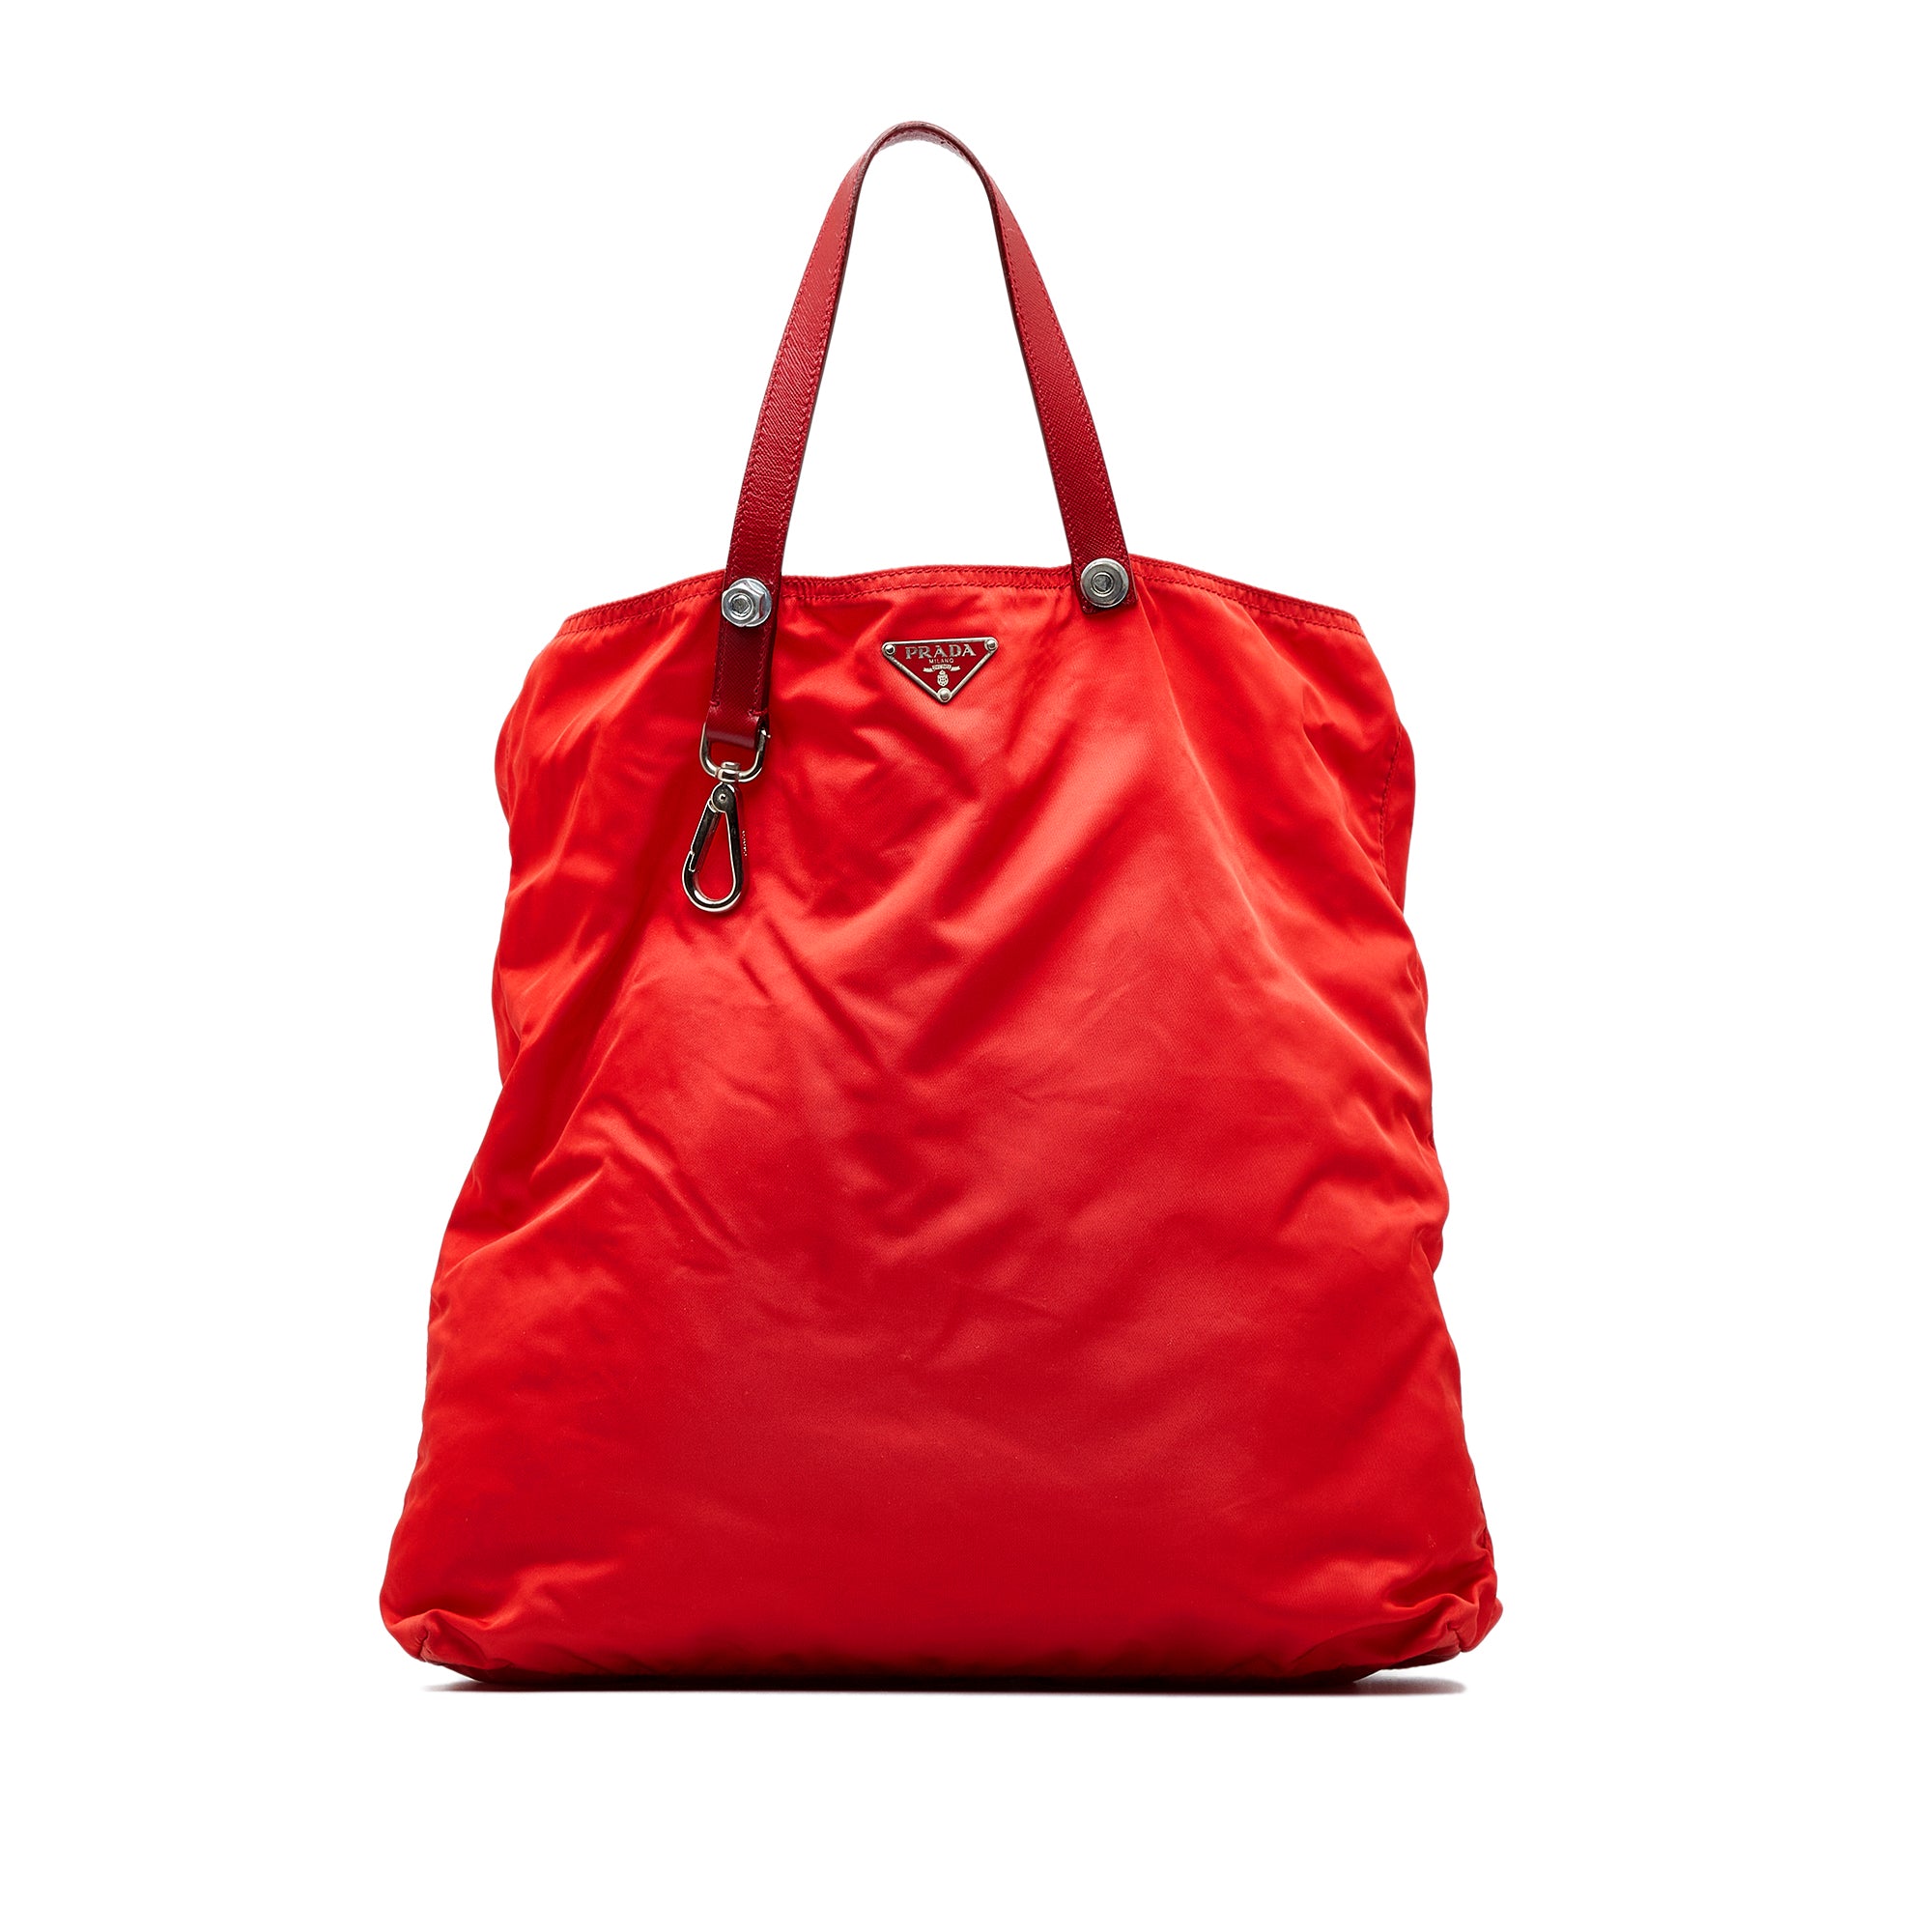 Prada Vintage - Patent Leather Satchel Bag - Red - Leather Handbag